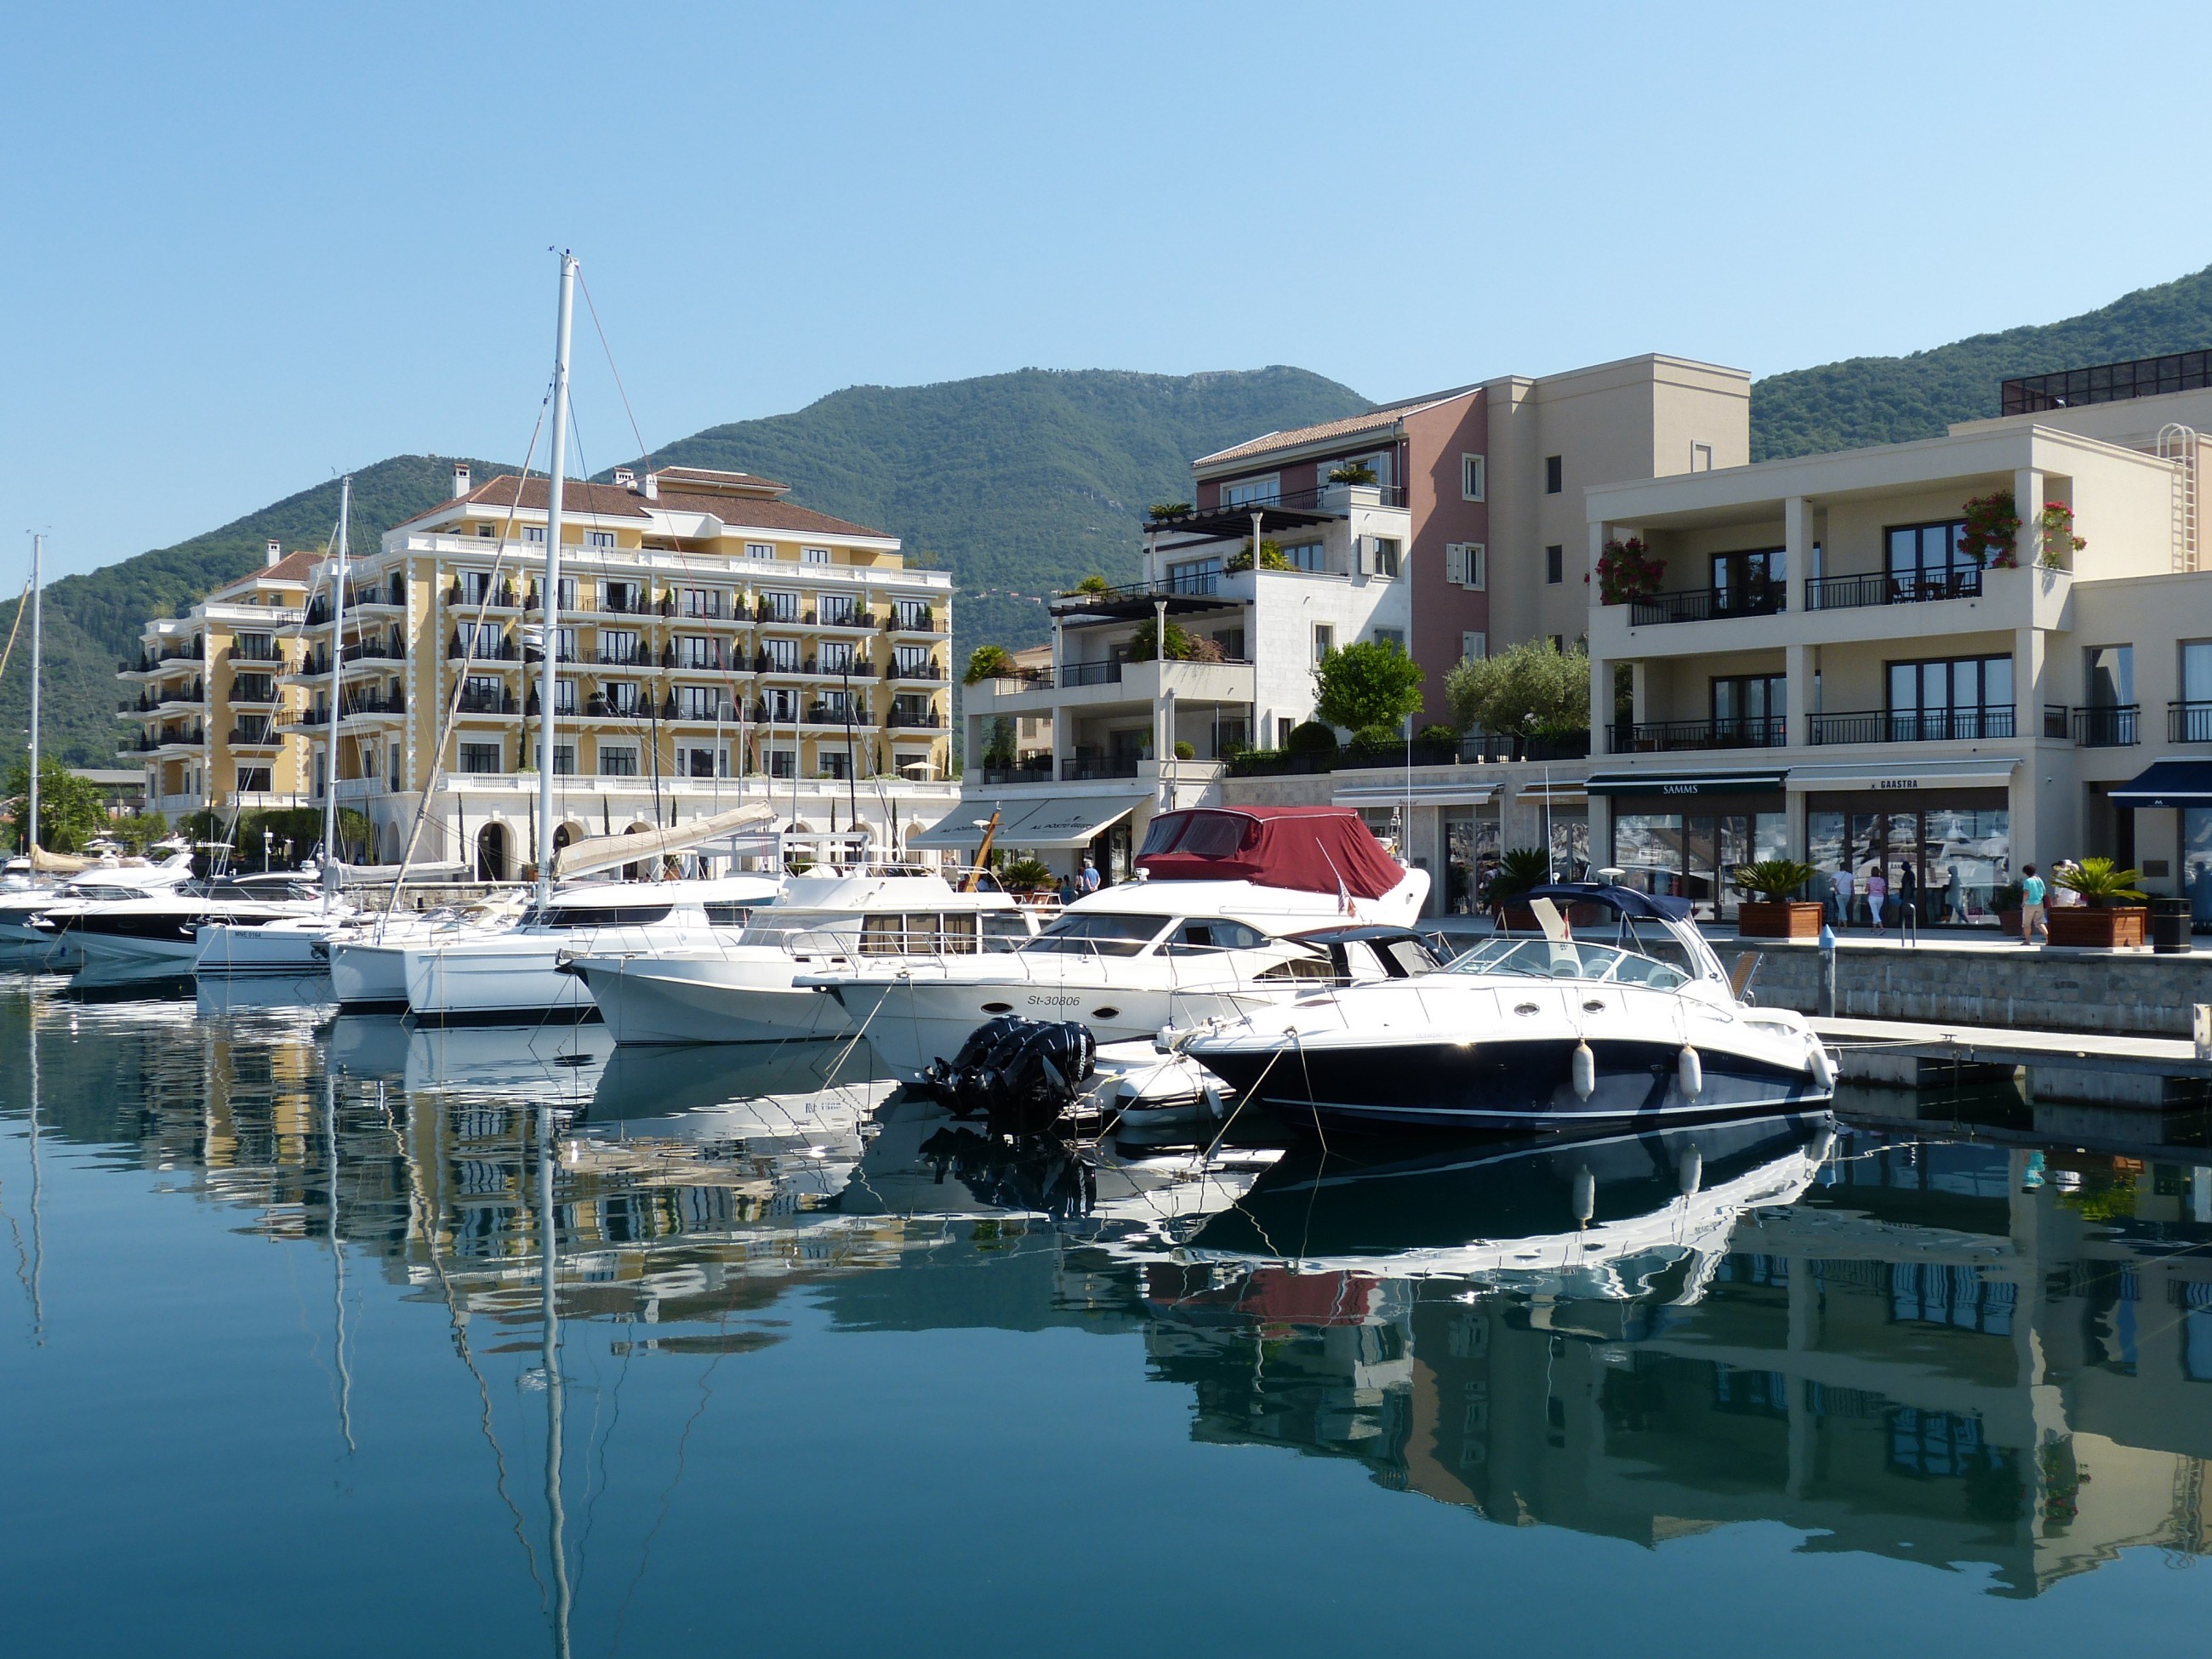 Montenegrin tourism